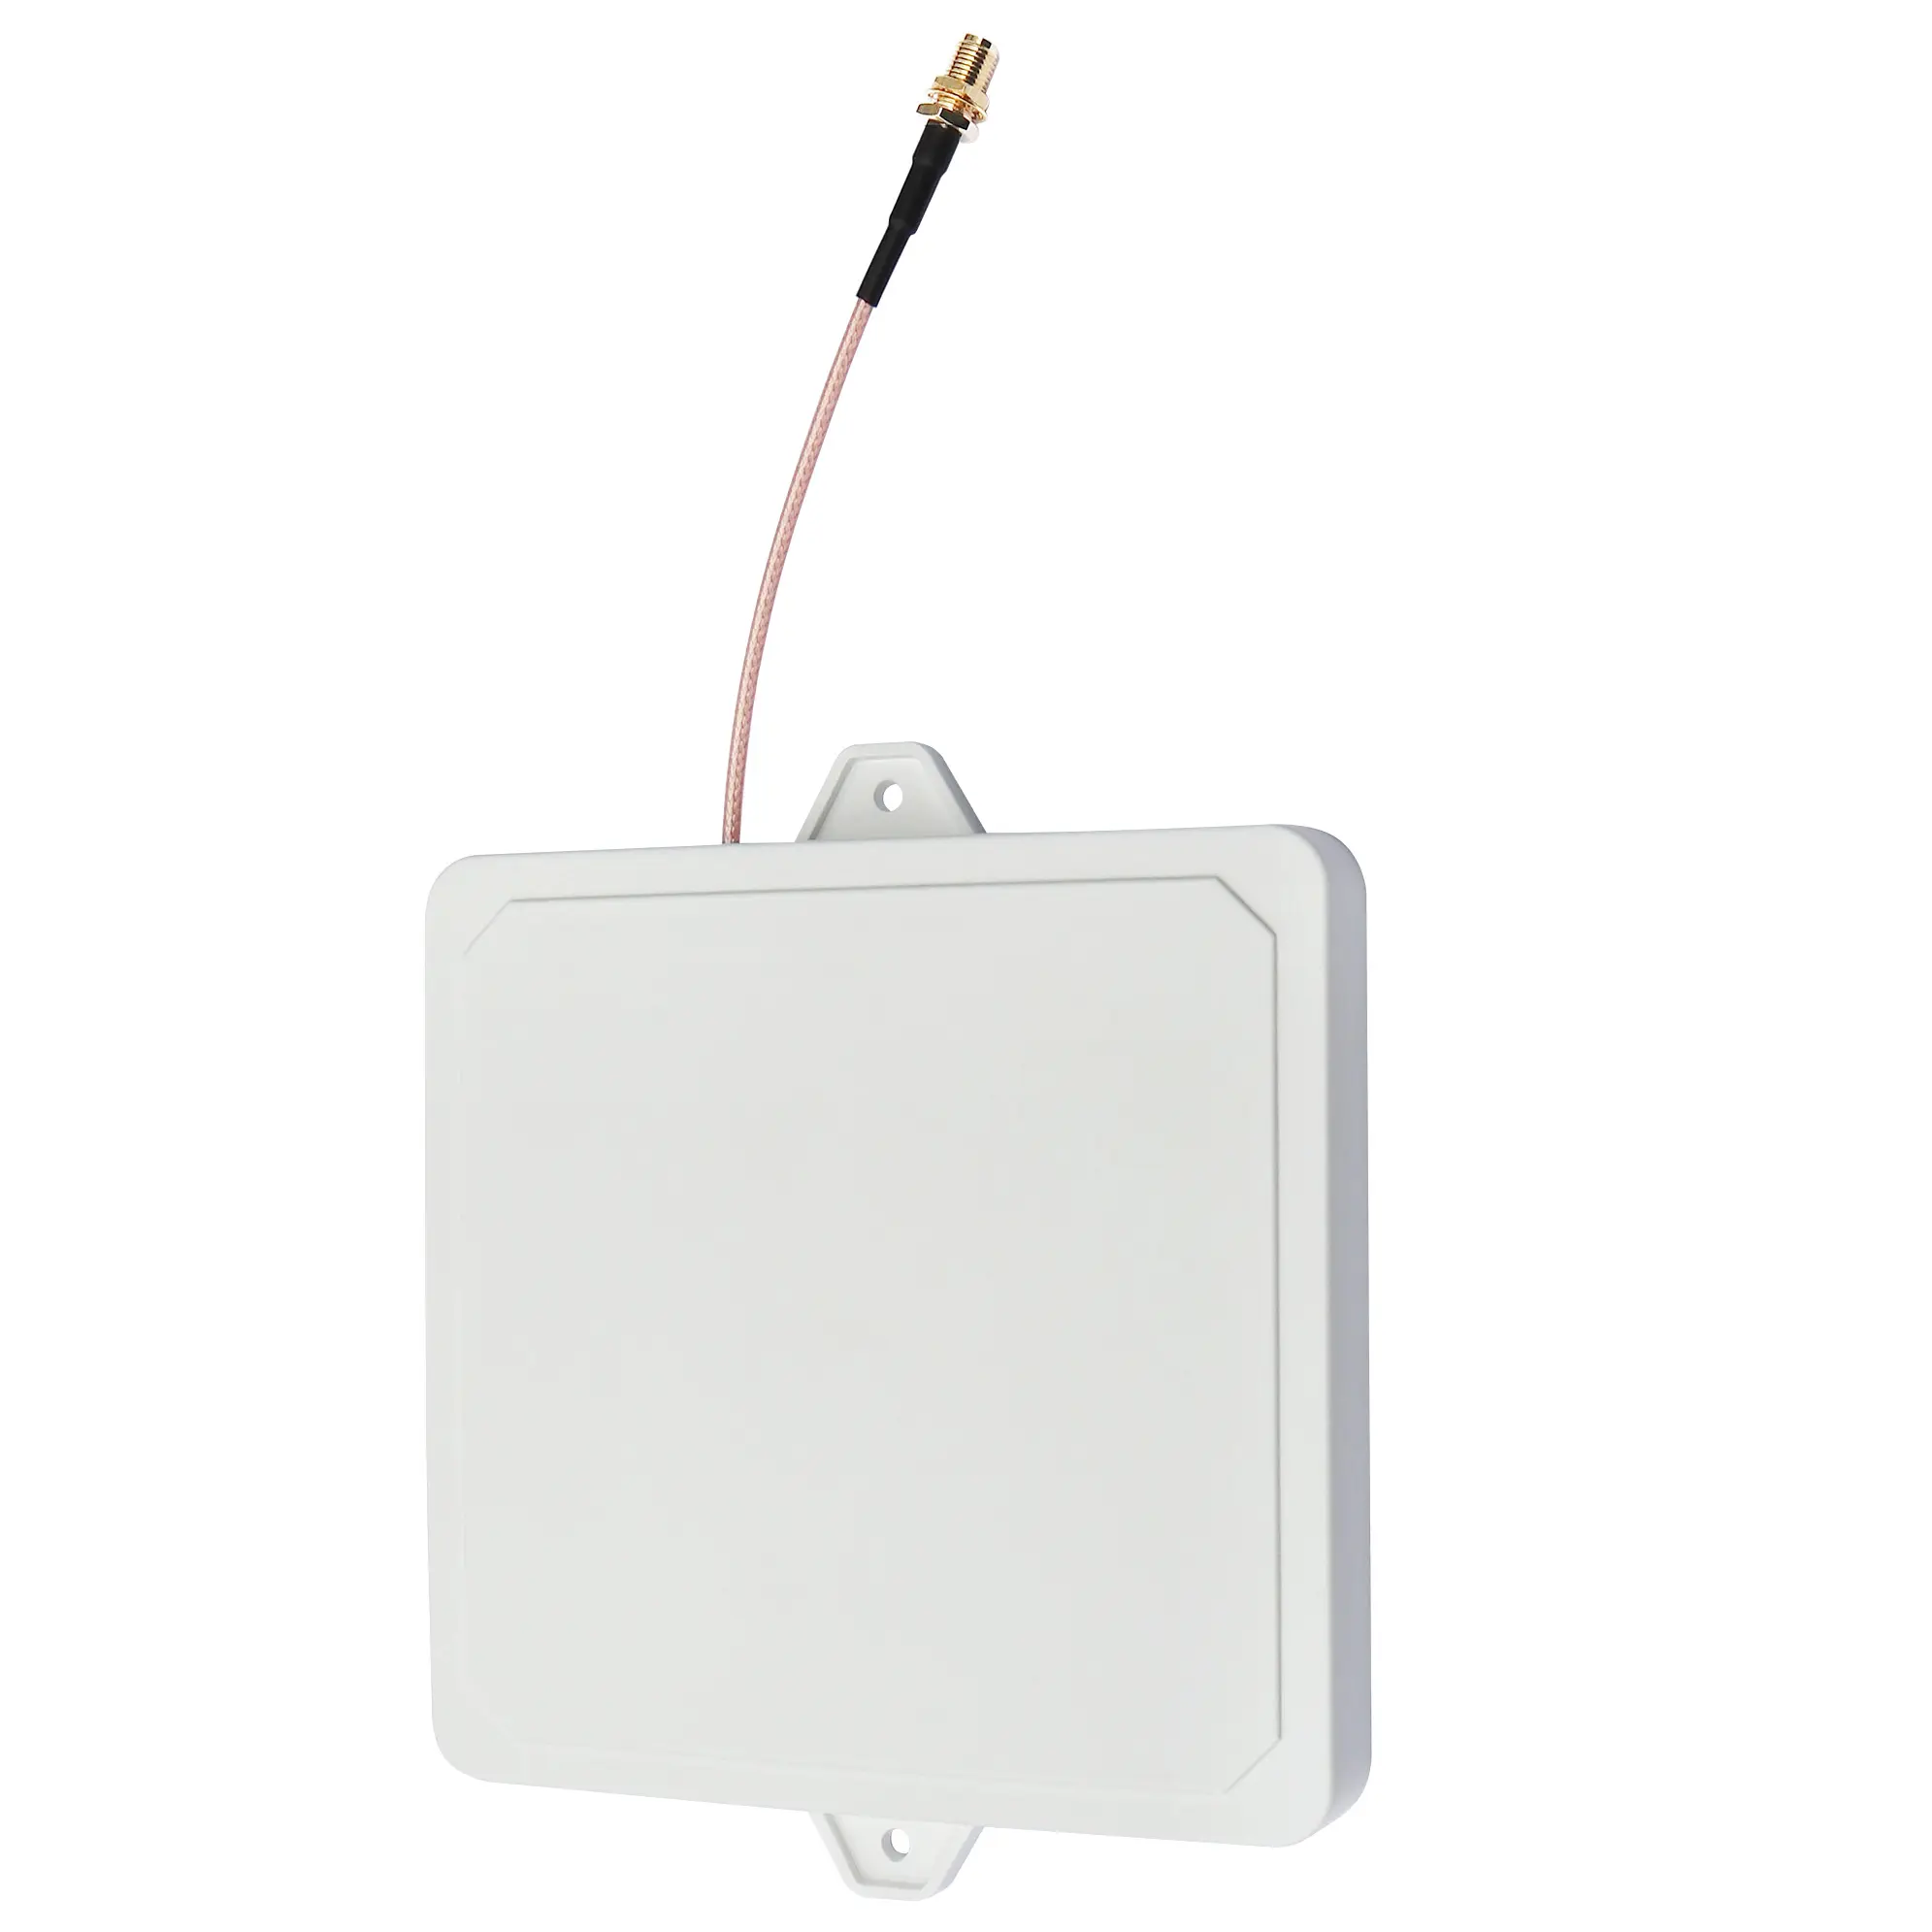 Antena pequeña impermeable UHF RFID, antena RFID de polarización circular para seguimiento logístico